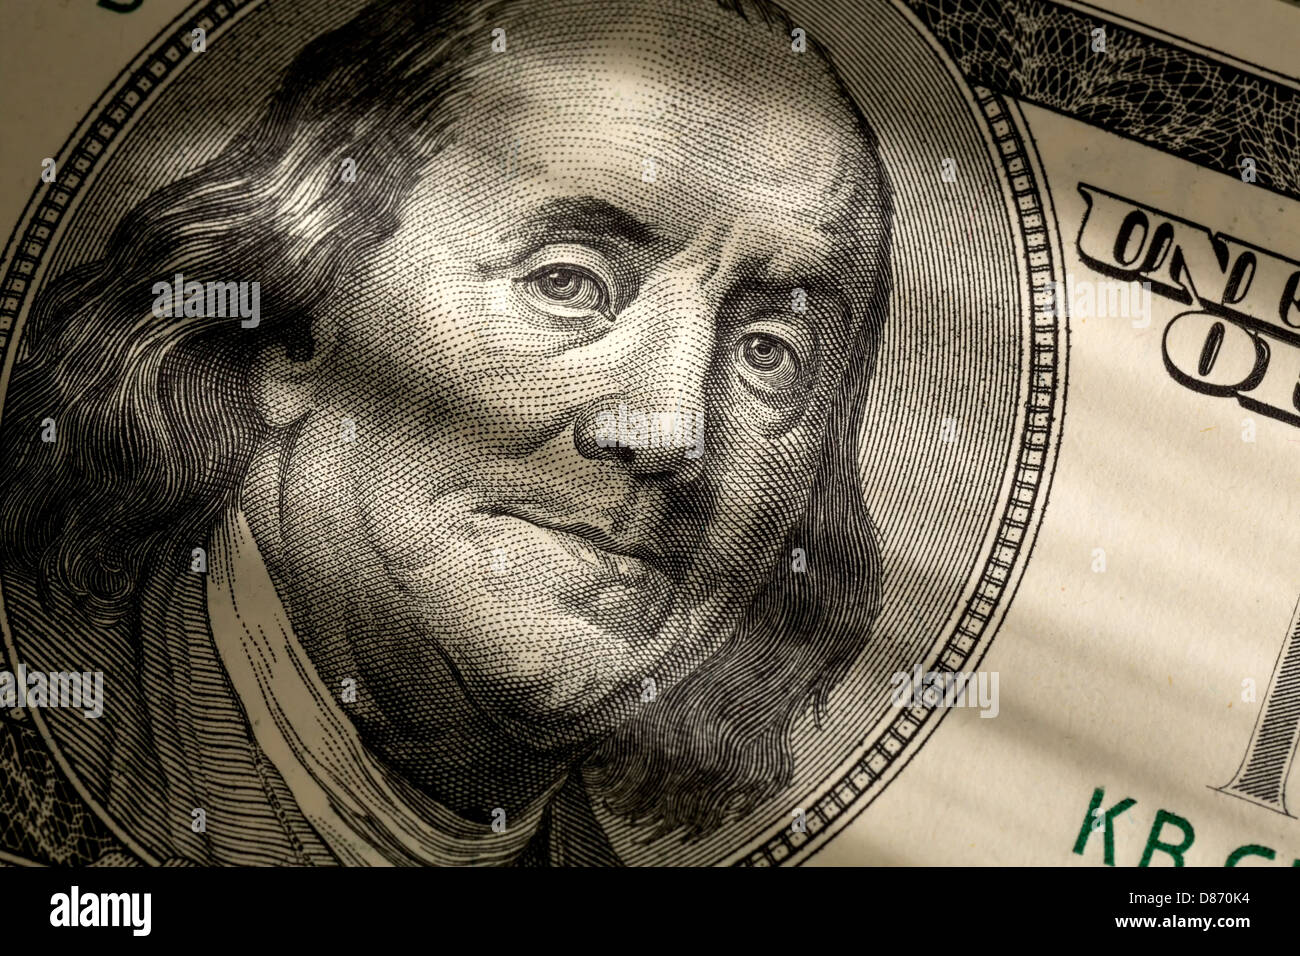 Франклин на какой купюре. Бенджамин Франклин деньги. Бенджамин Франклин 100$. Бенджамин Франклин 100$ золотой. Франклин Бенджамин доллар.